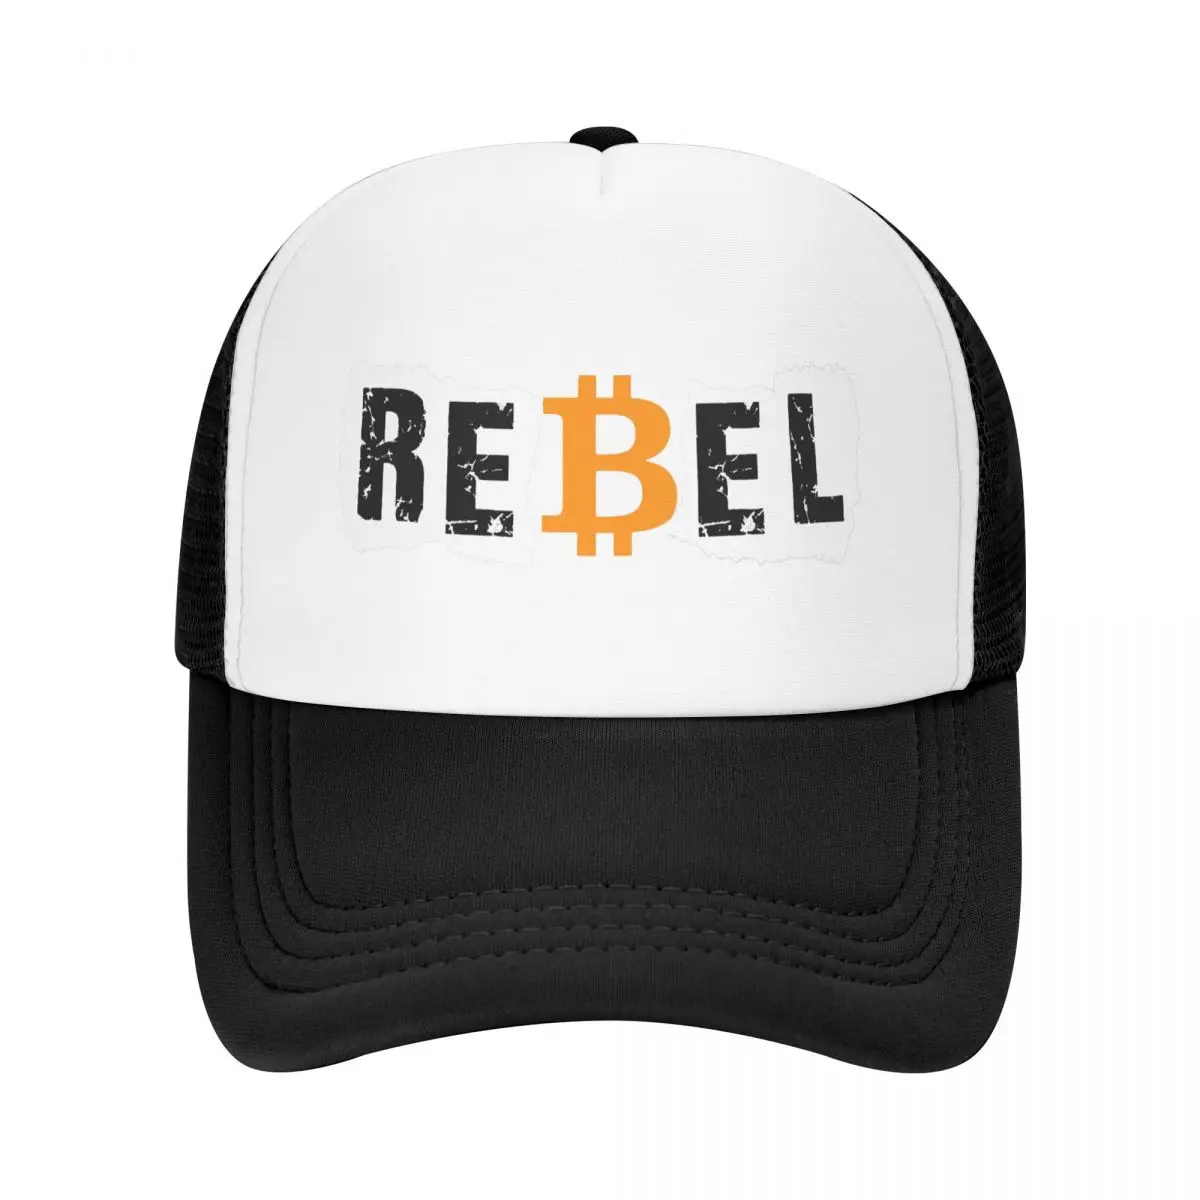 

Bitcoin Crypto Miners Meme Trucker Hats Rebel Mesh Net Baseball Cap Snapback Stylish Kpop adjustable Peaked Hat For Men Women